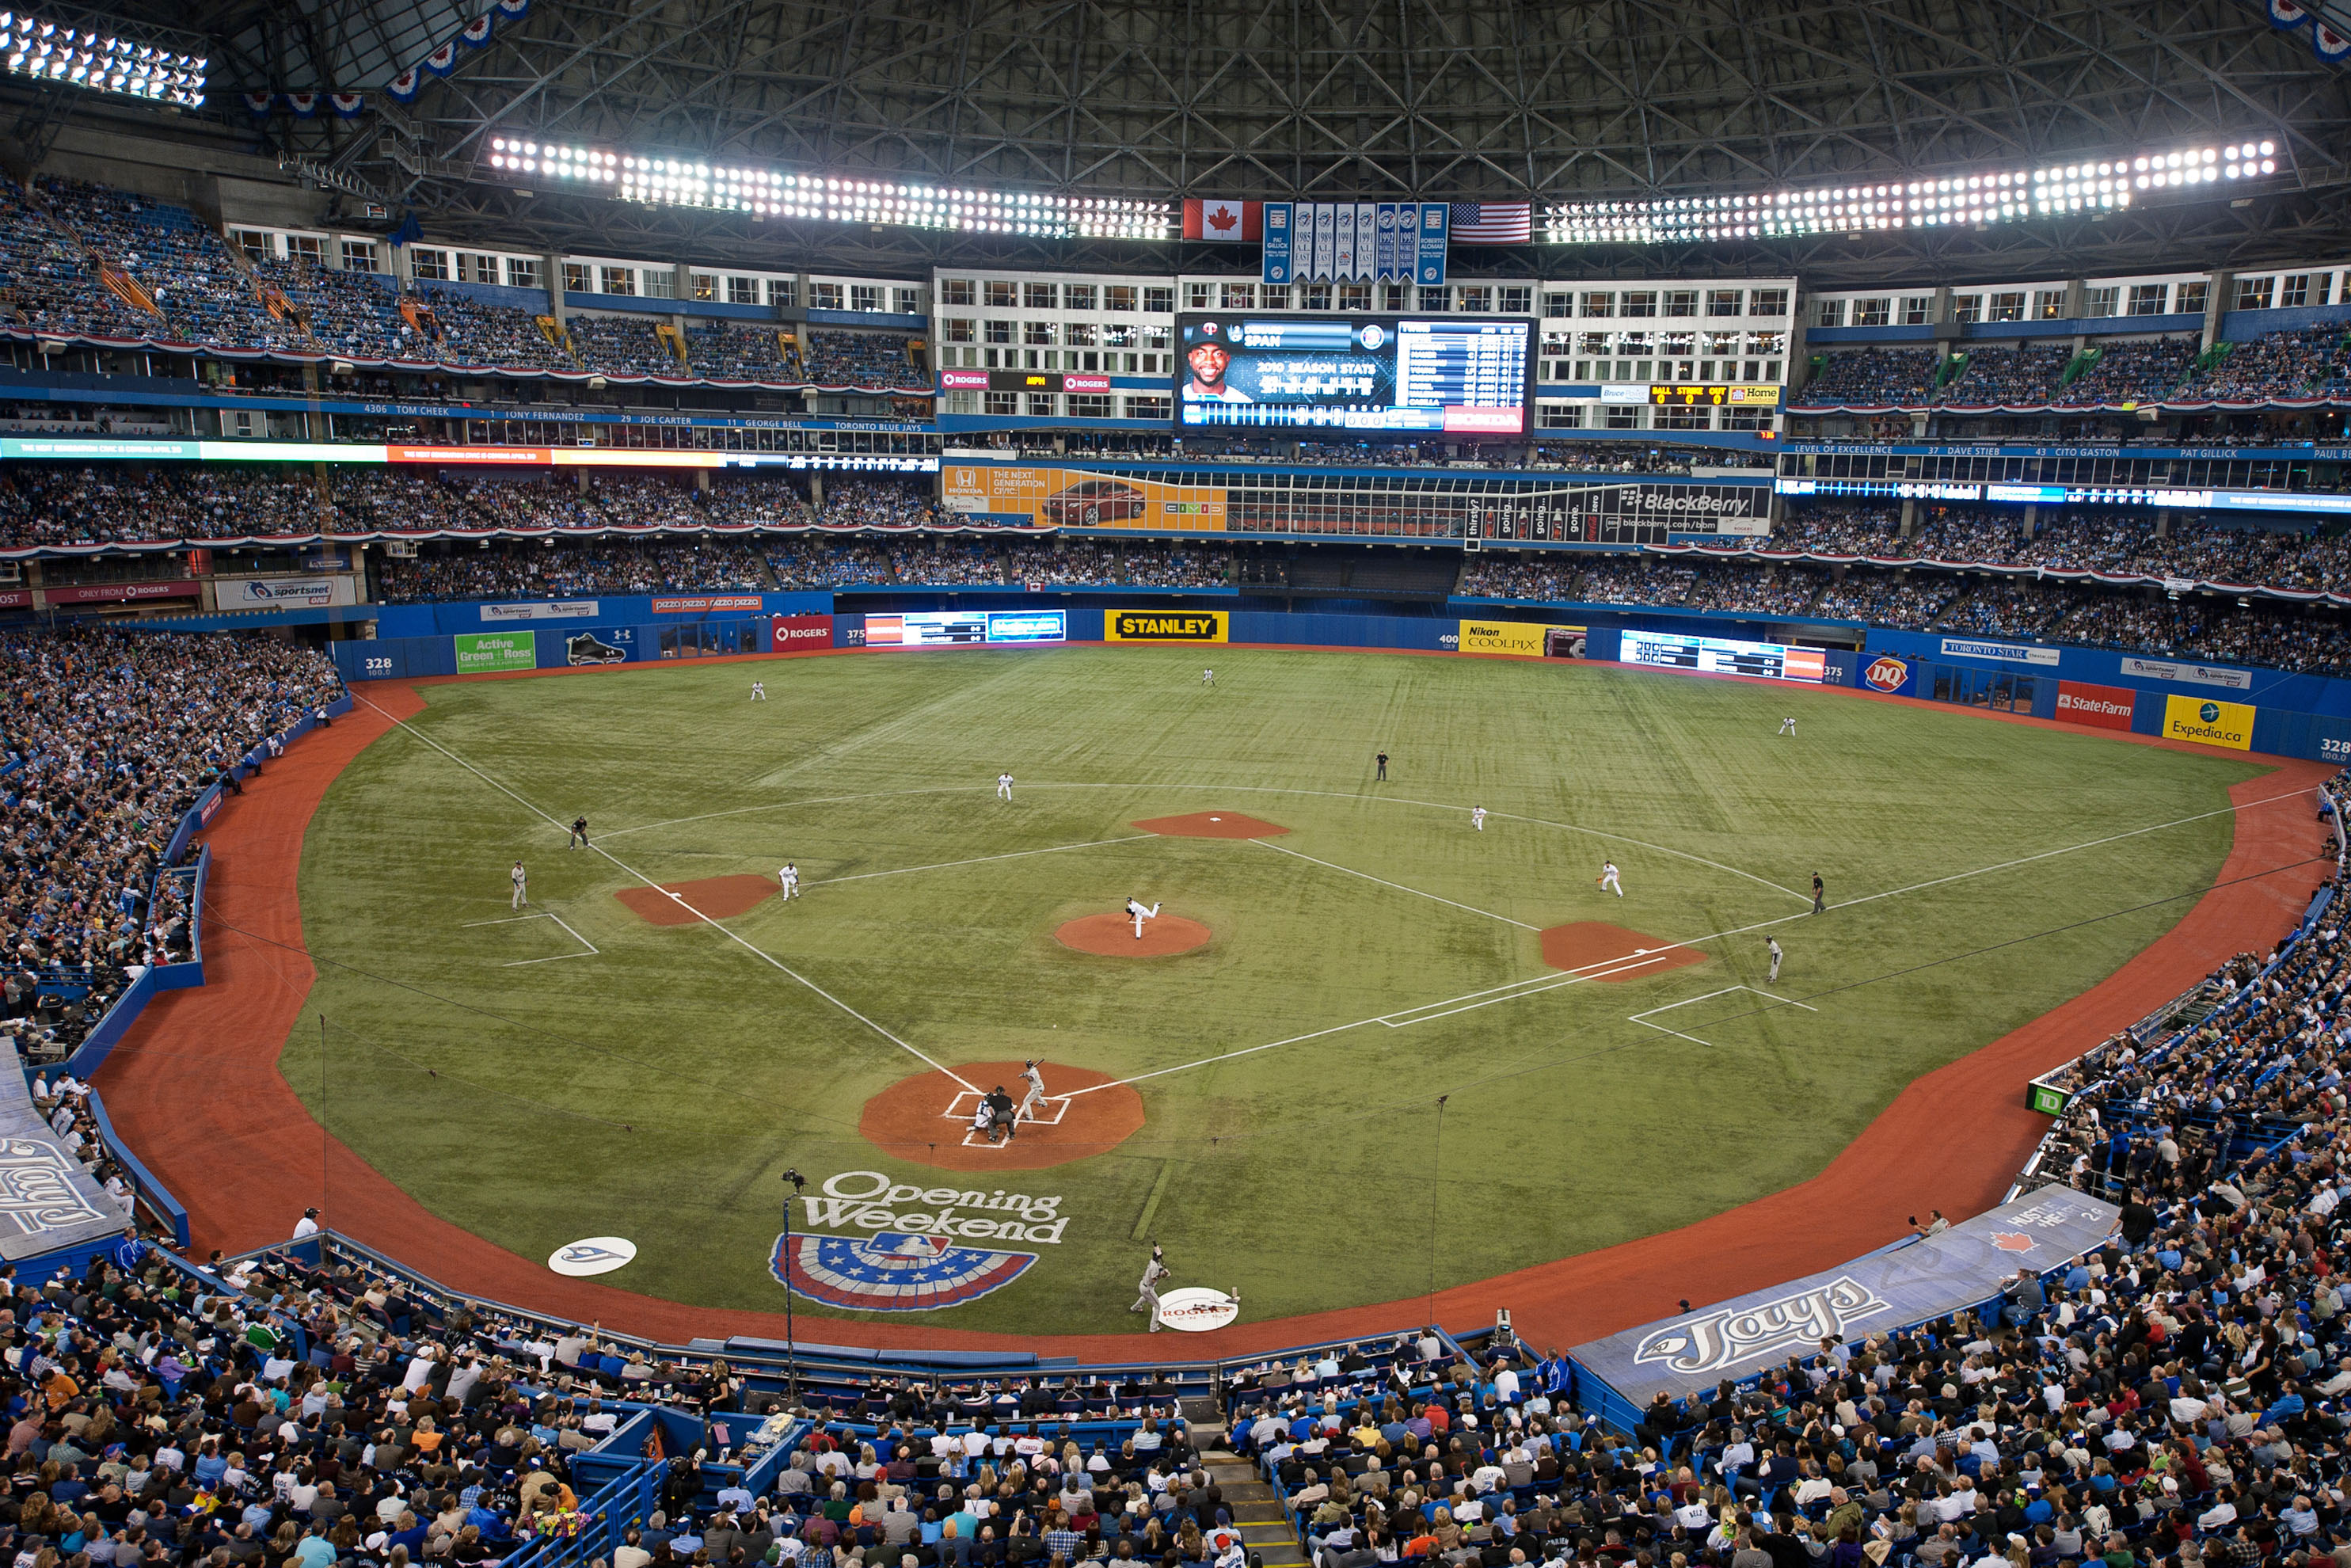 Rogers Centre, stadium of the Blue Jays baseball team, Toronto